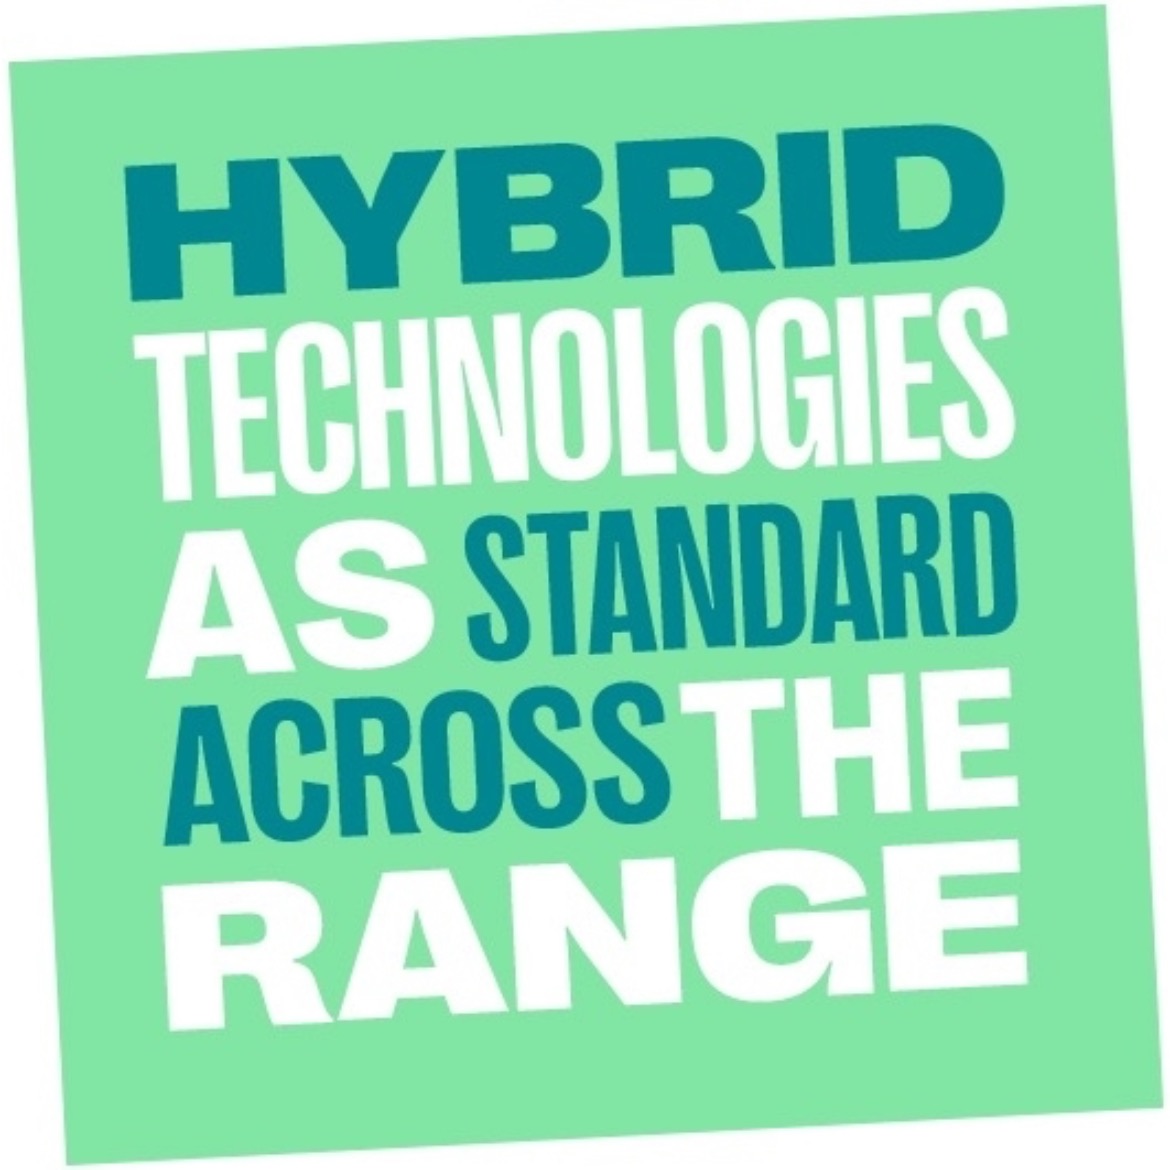 Hybrid Technologies as standard